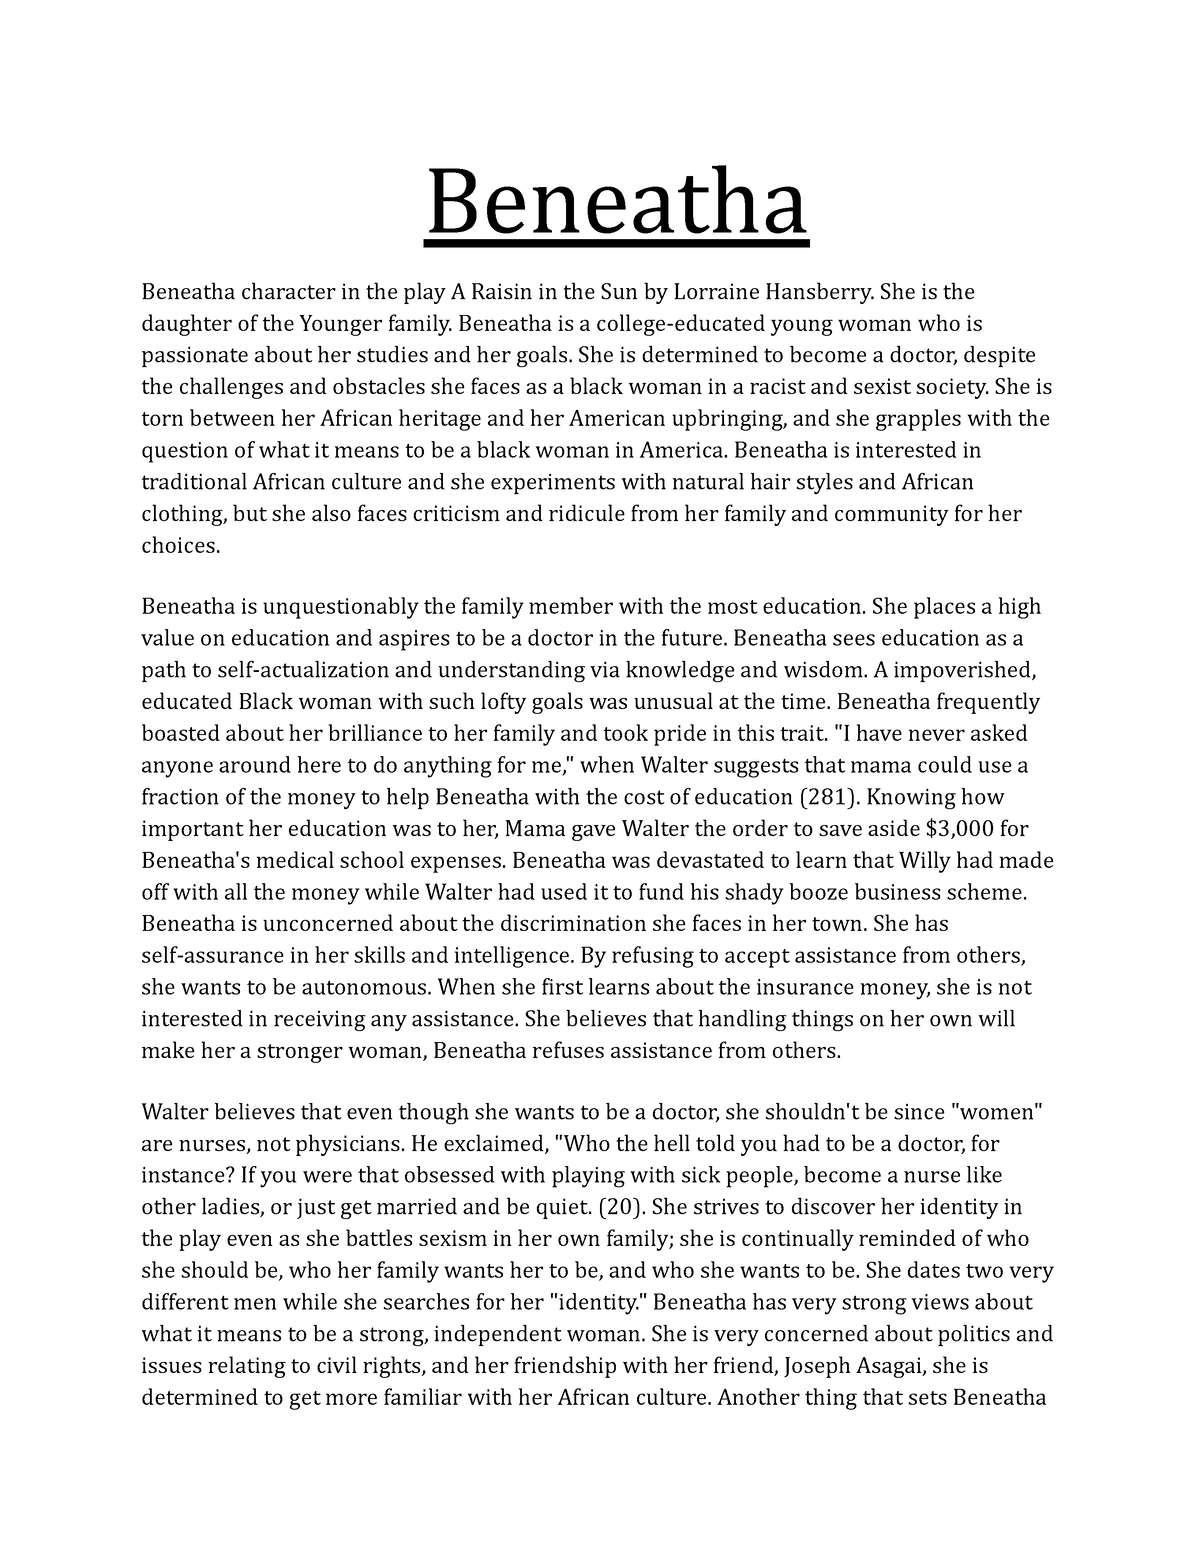 beneatha character analysis essay